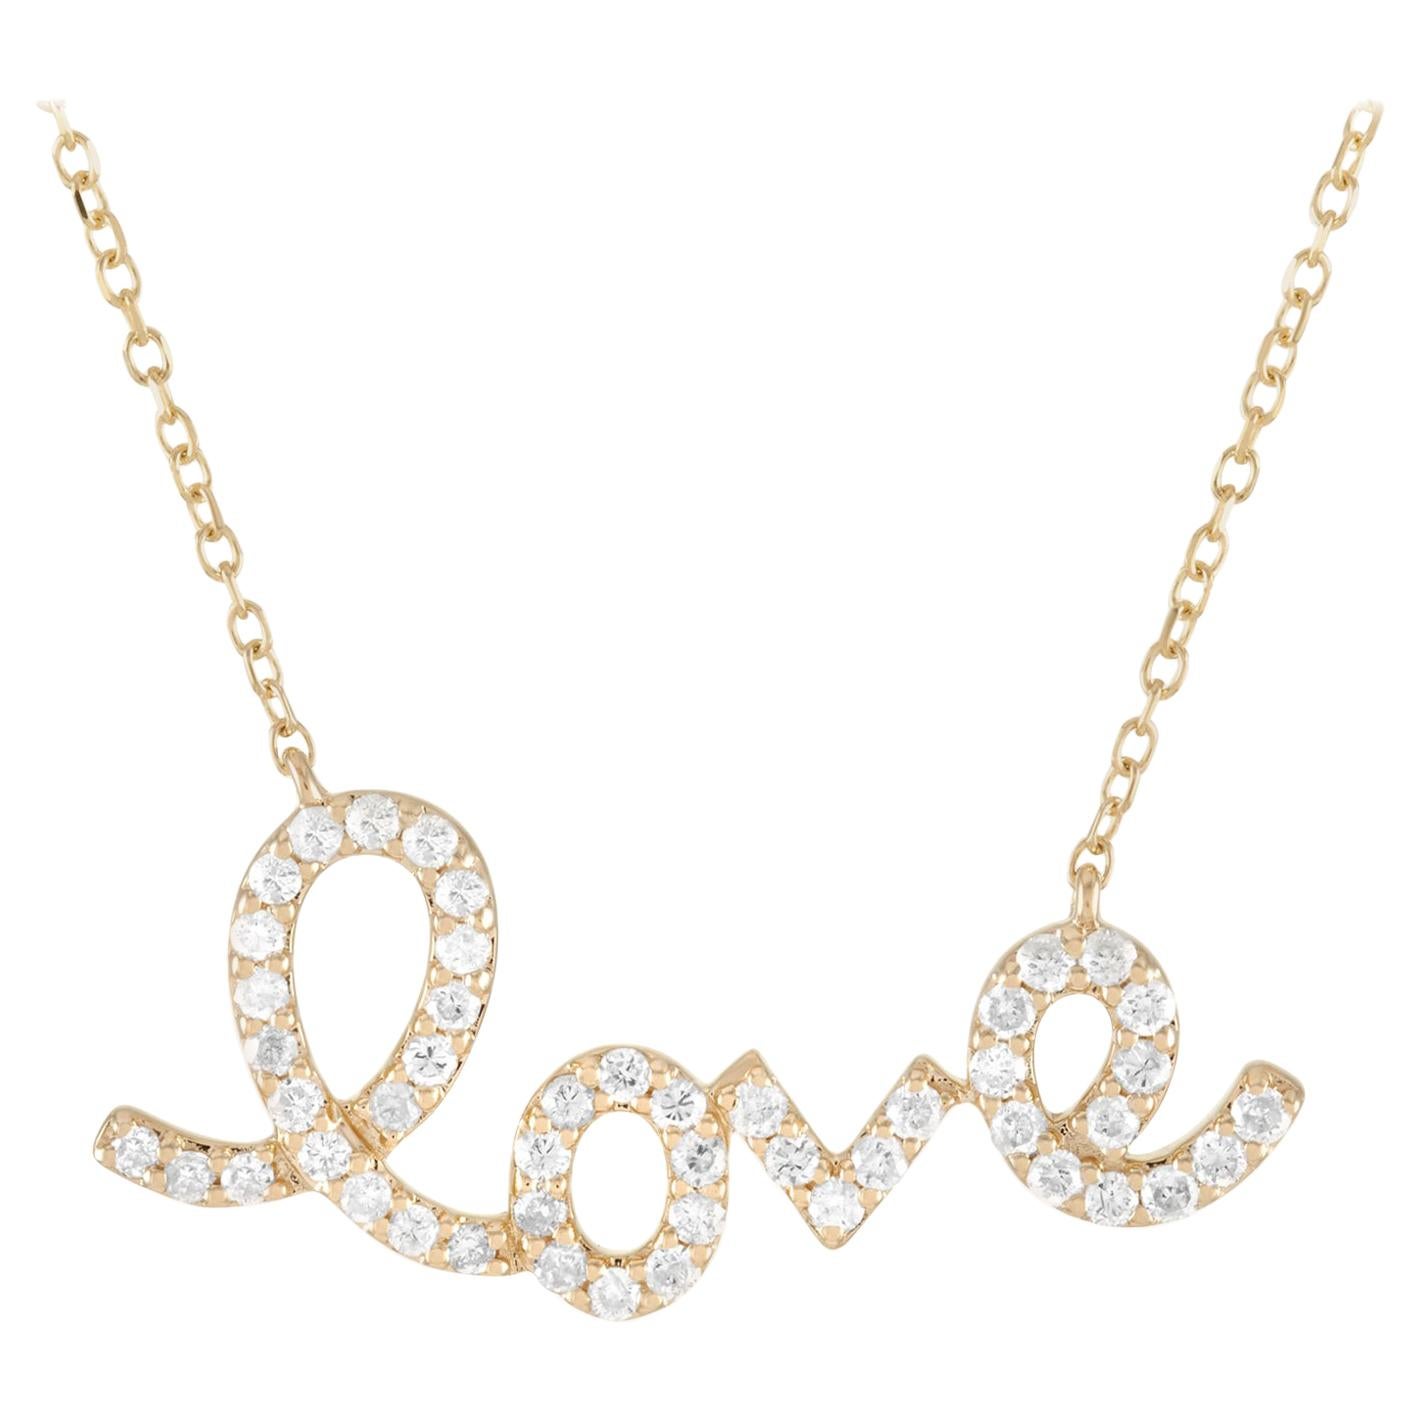 LB Exclusive 14 Karat Yellow Gold 0.26 Carat Diamond Love Pendant Necklace